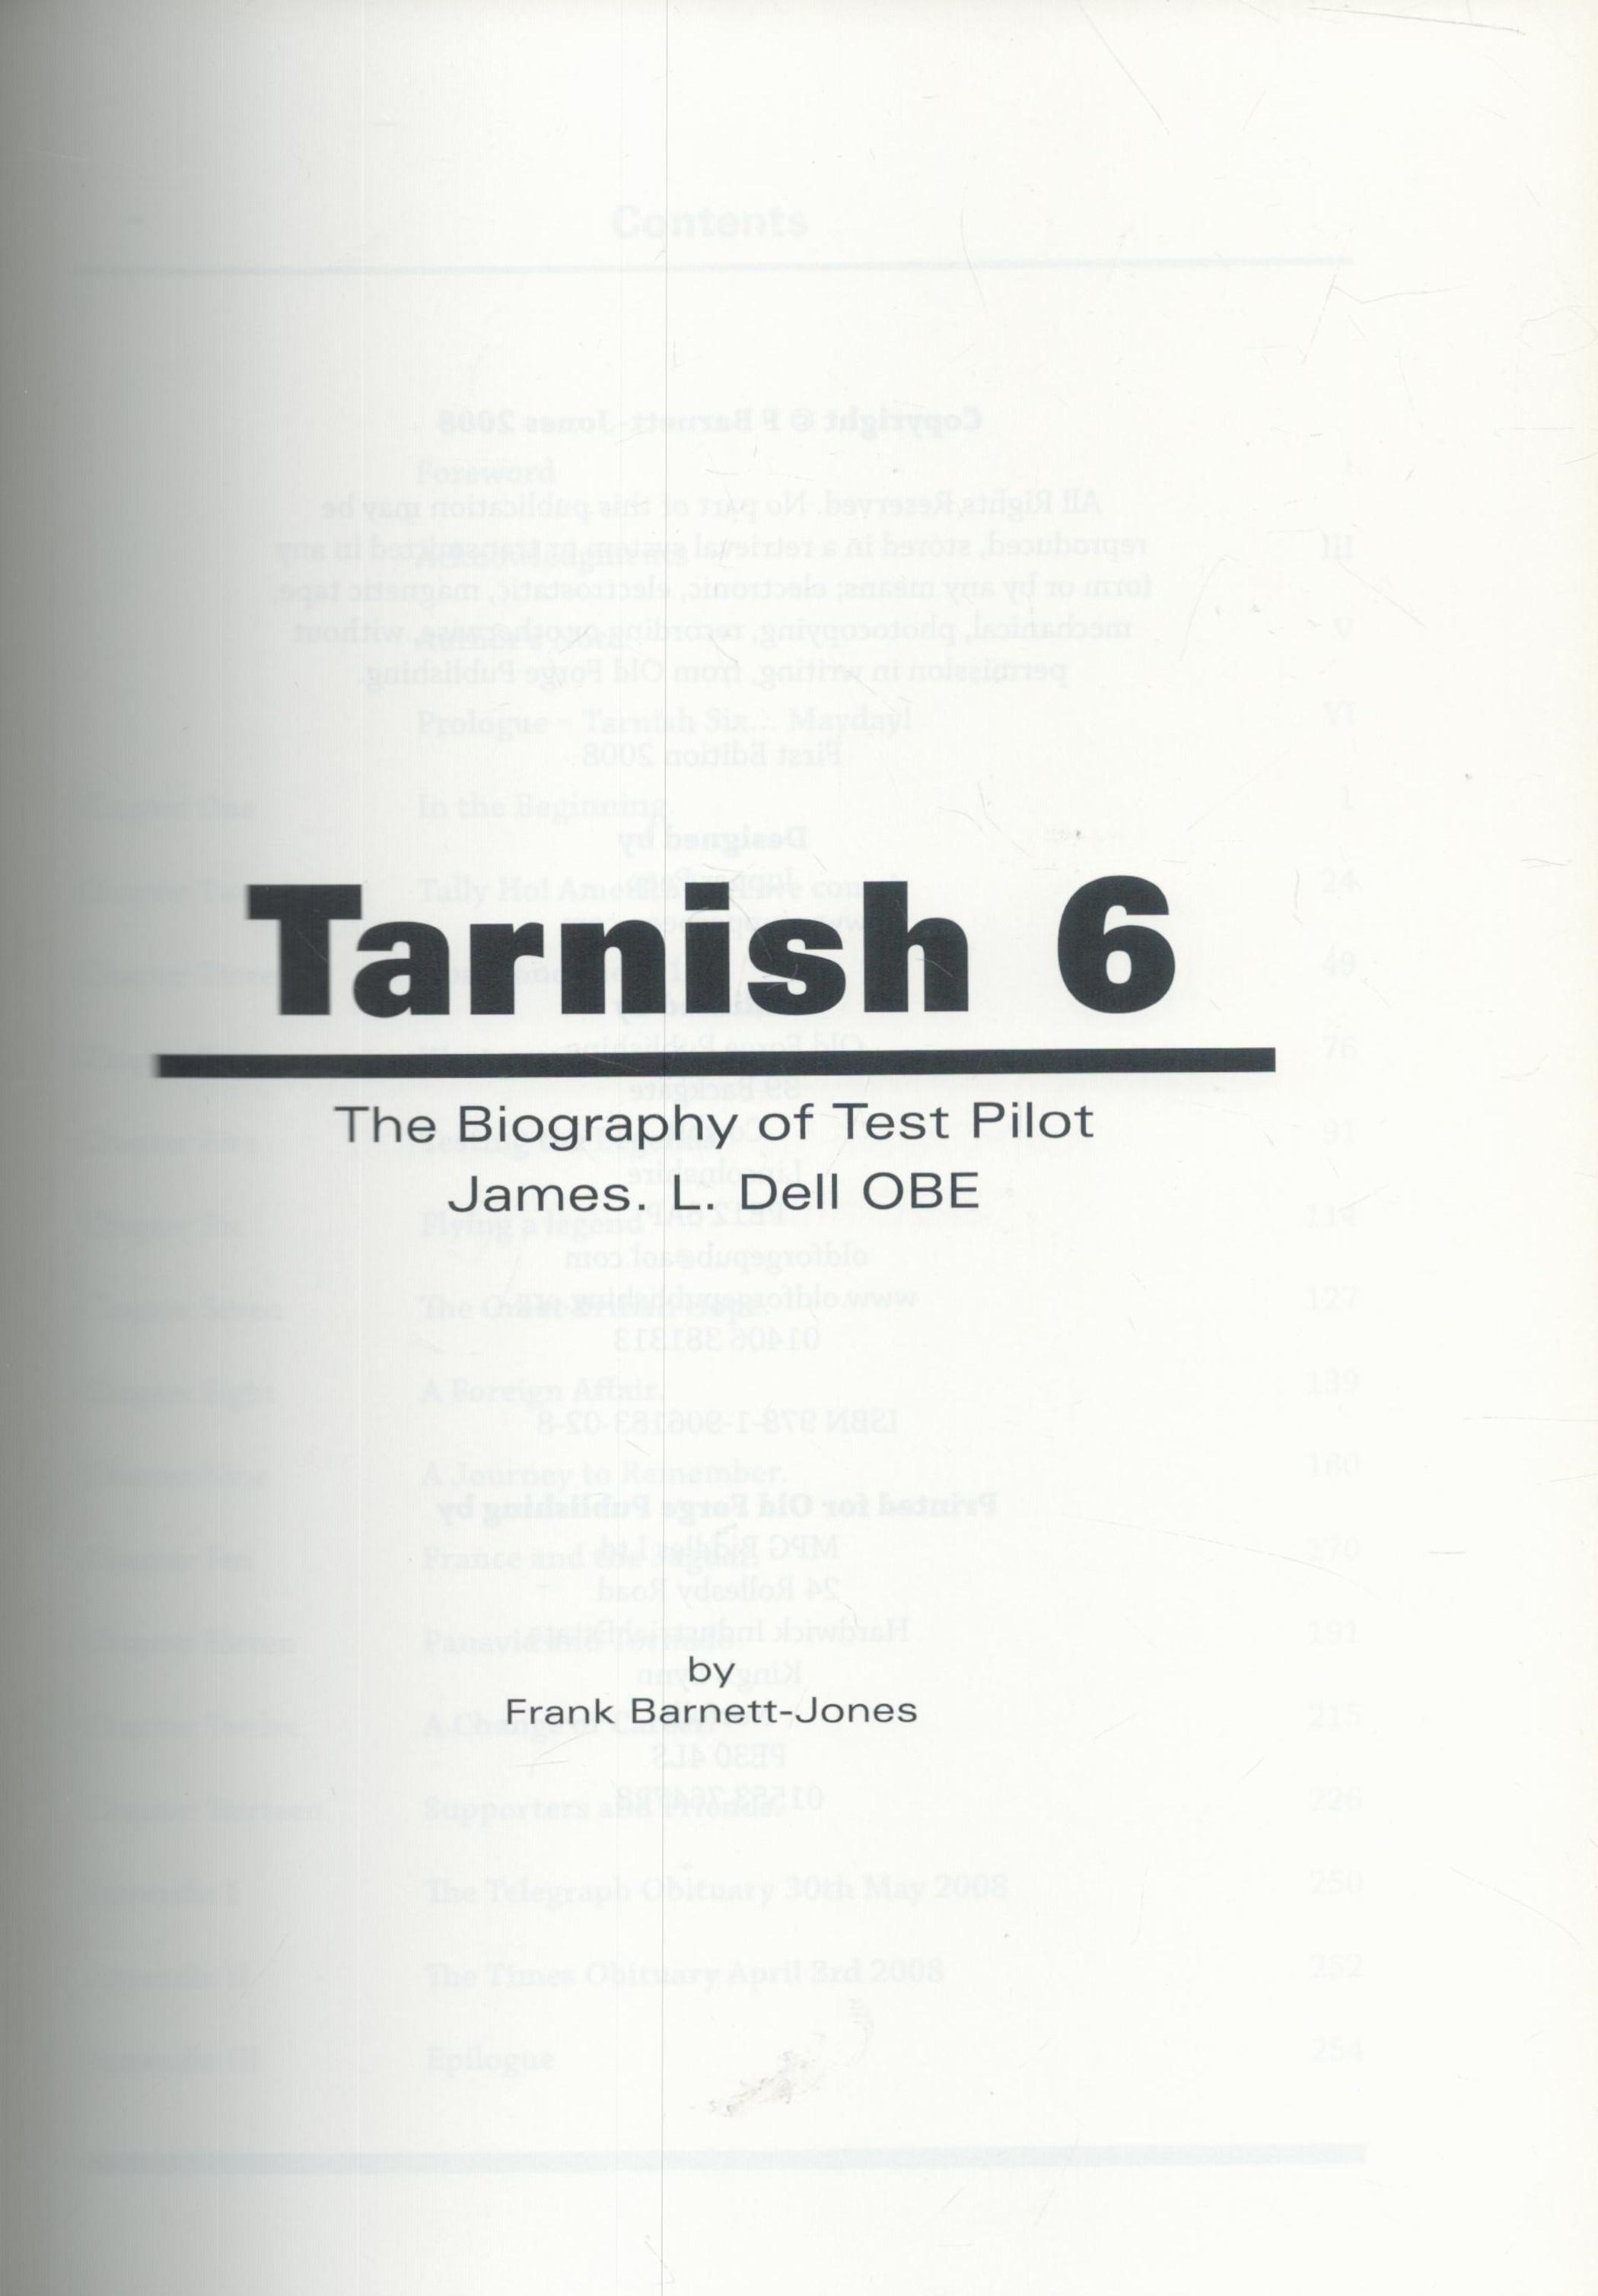 Tarnish 6 - The Biography of Test Pilot Jimmy Dell by Frank Barnett-Jones 2008 Hardback Book First - Image 4 of 9